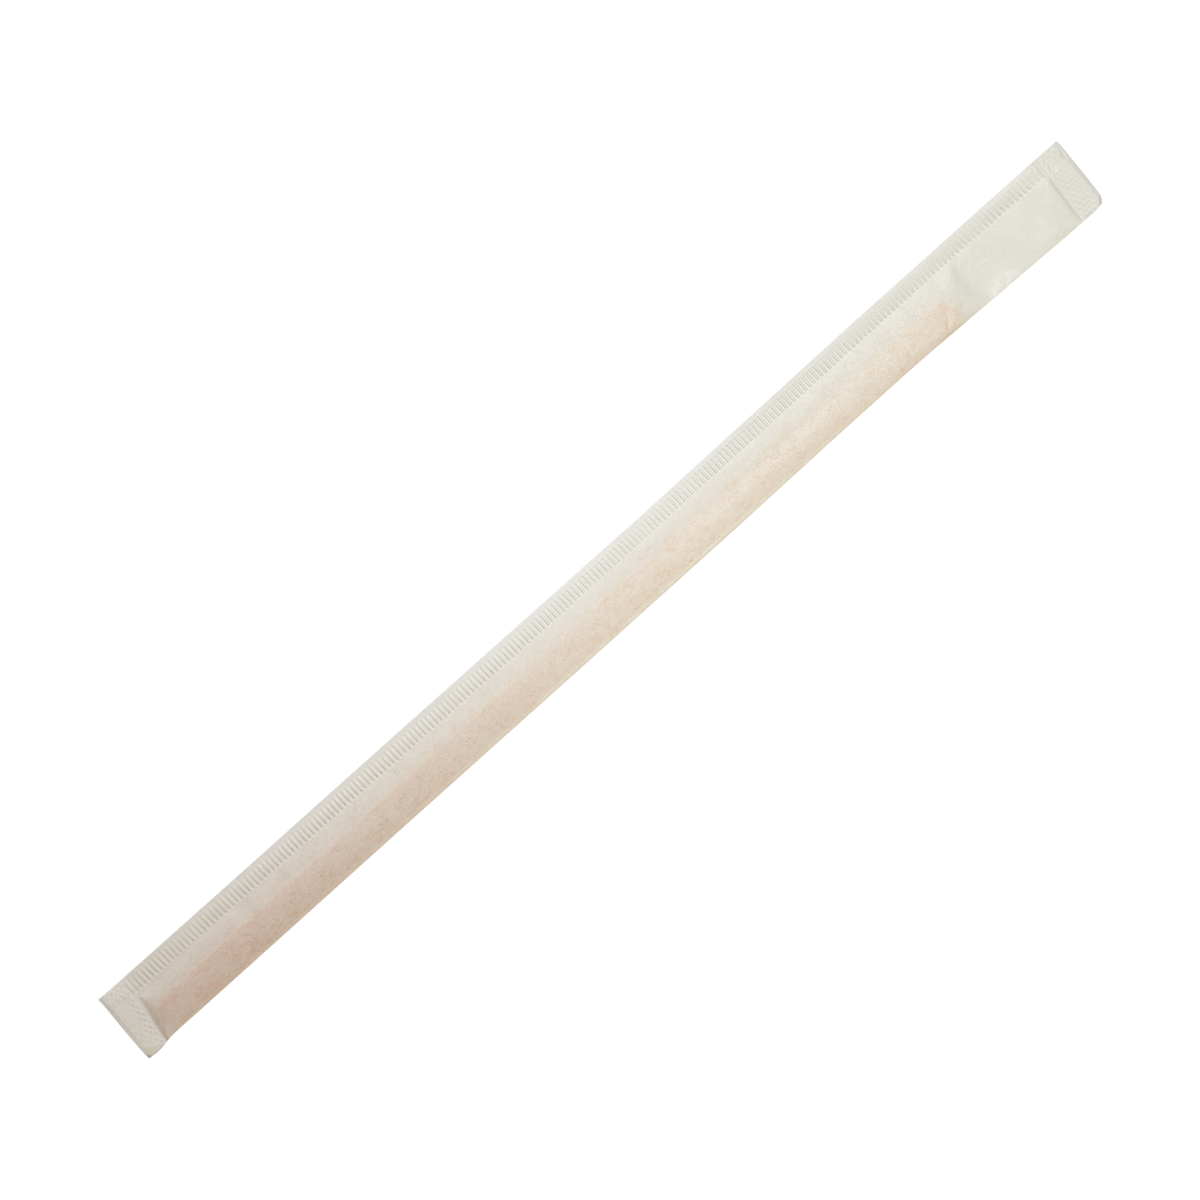 Wrapped Wood Stirrers - Karat Earth 7.5 Wooden Stir Sticks - 5000 ct